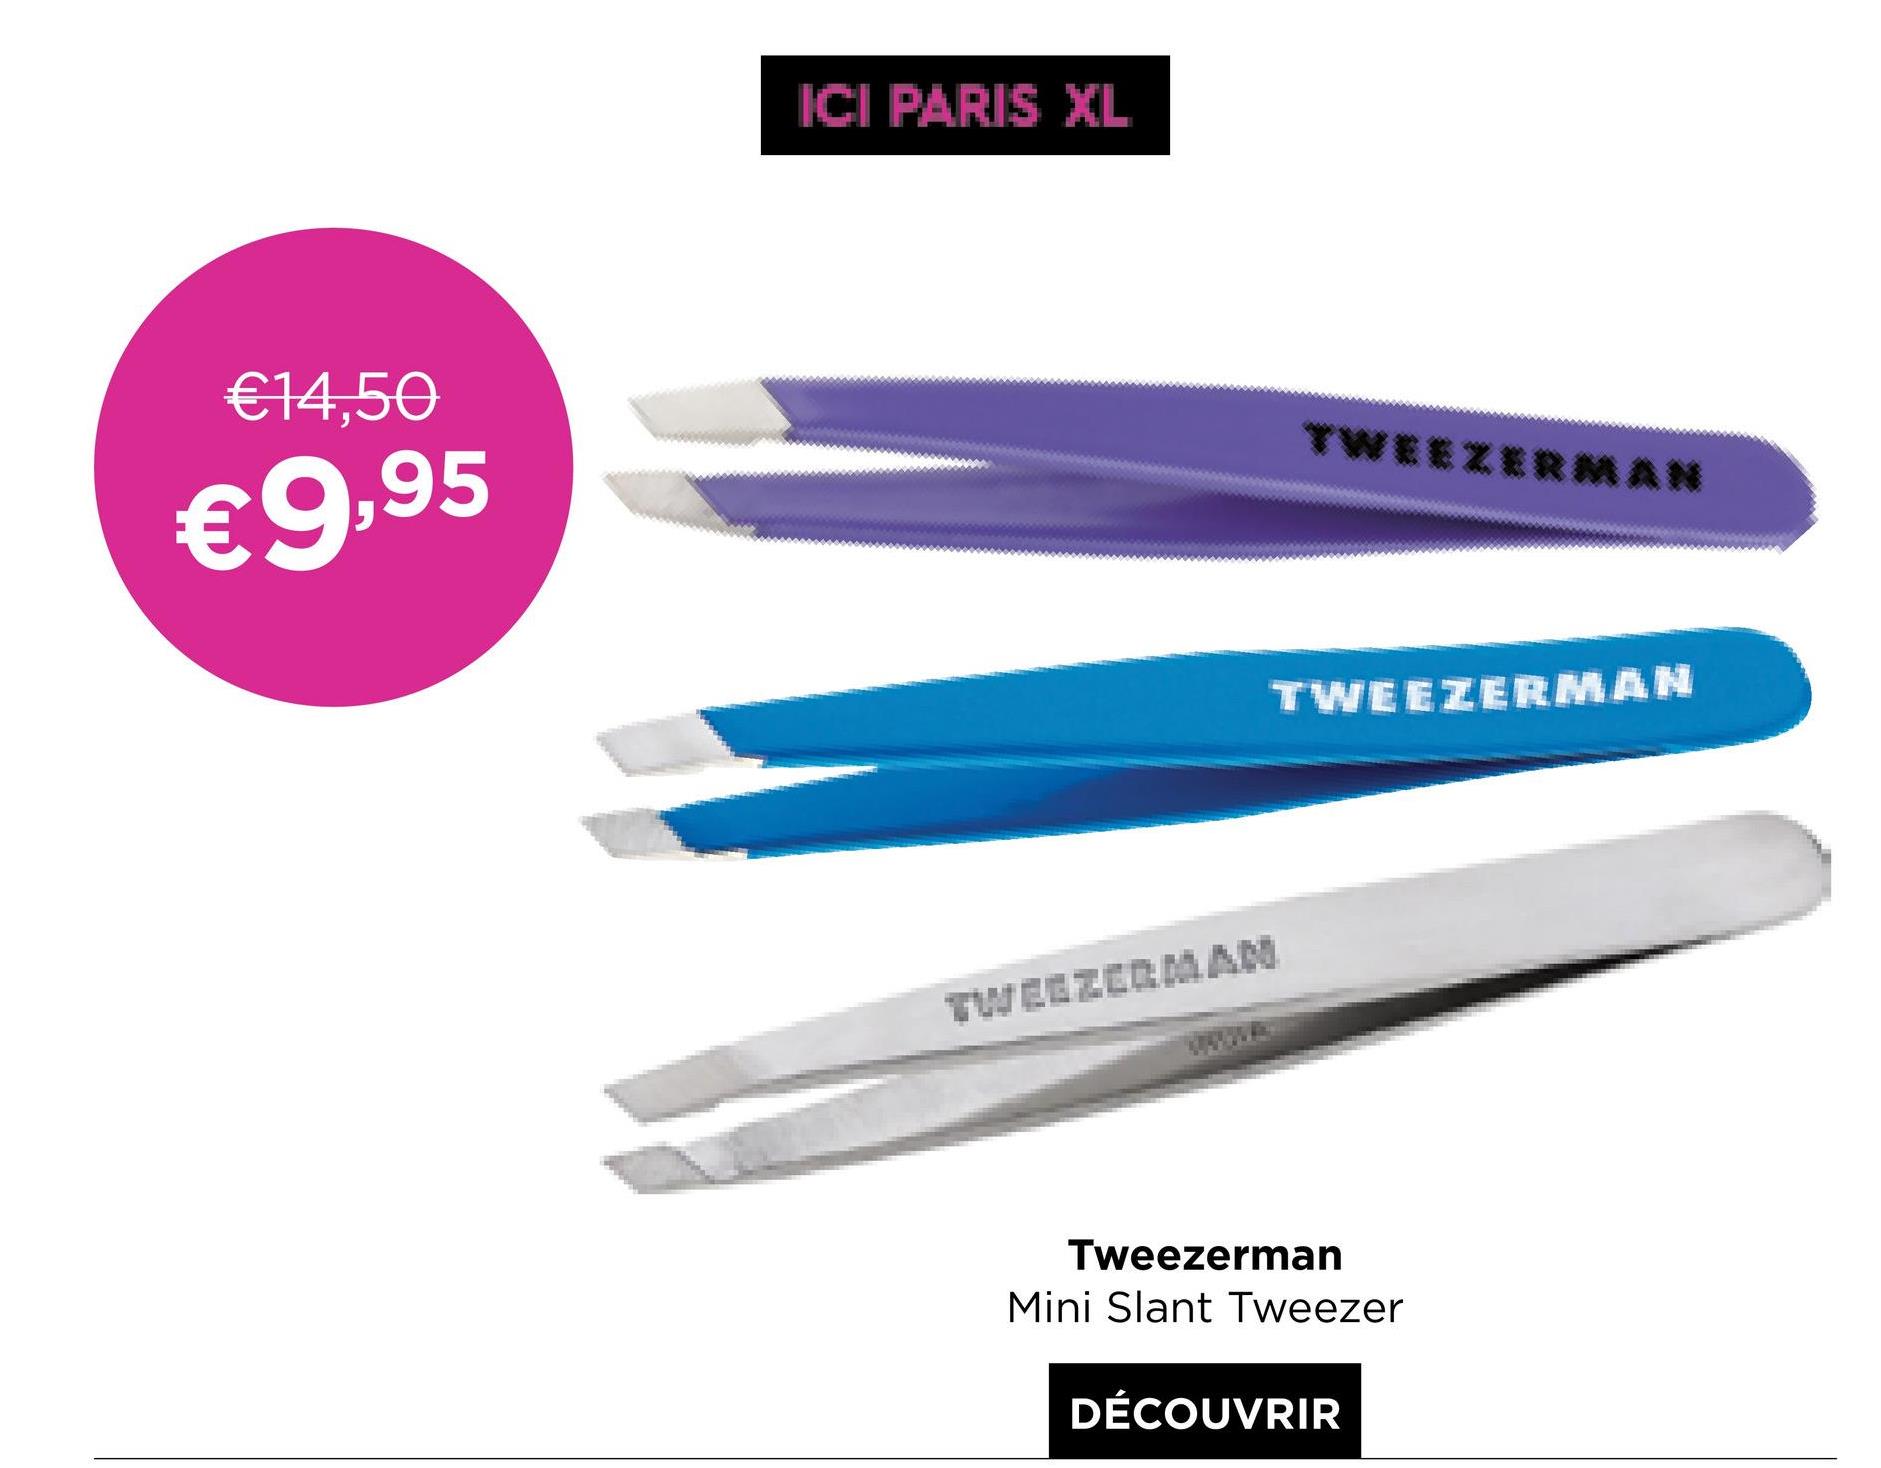 ICI PARIS XL
€14,50
TWEEZERMAN
€9,95
TWEEZERMAN
TWEEZERMAL
Tweezerman
Mini Slant Tweezer
DÉCOUVRIR
